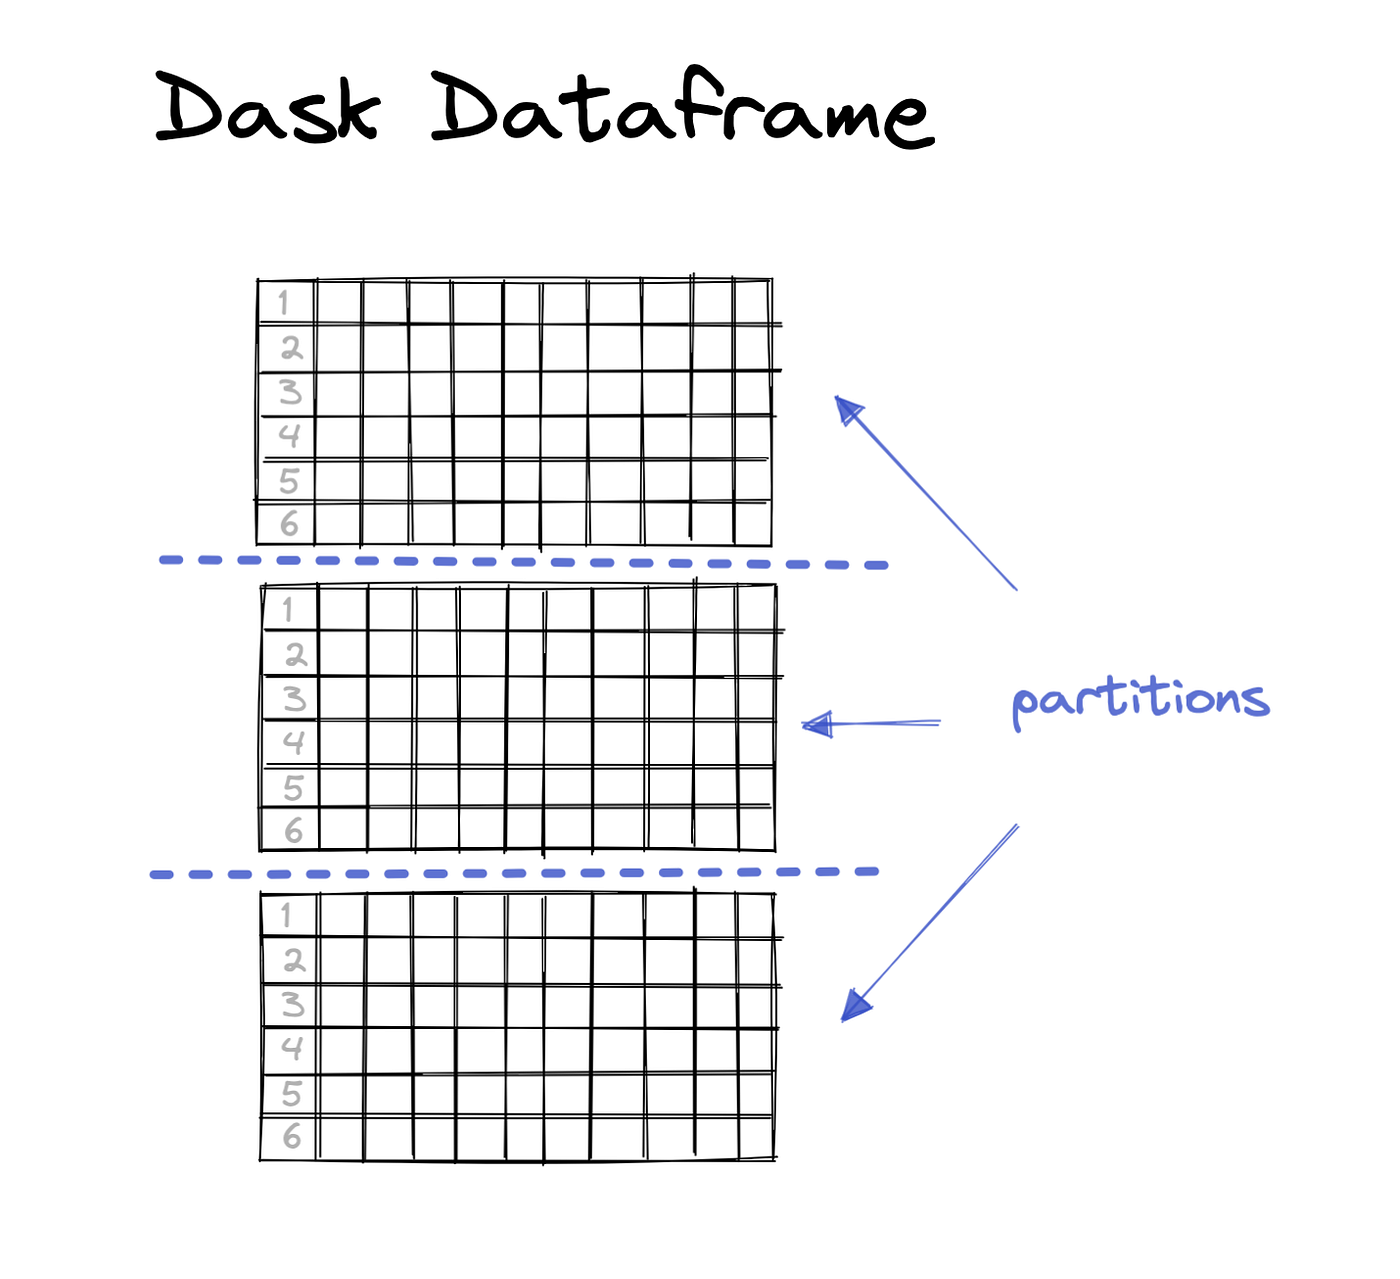 大Dask dataframe分为3较小的分区